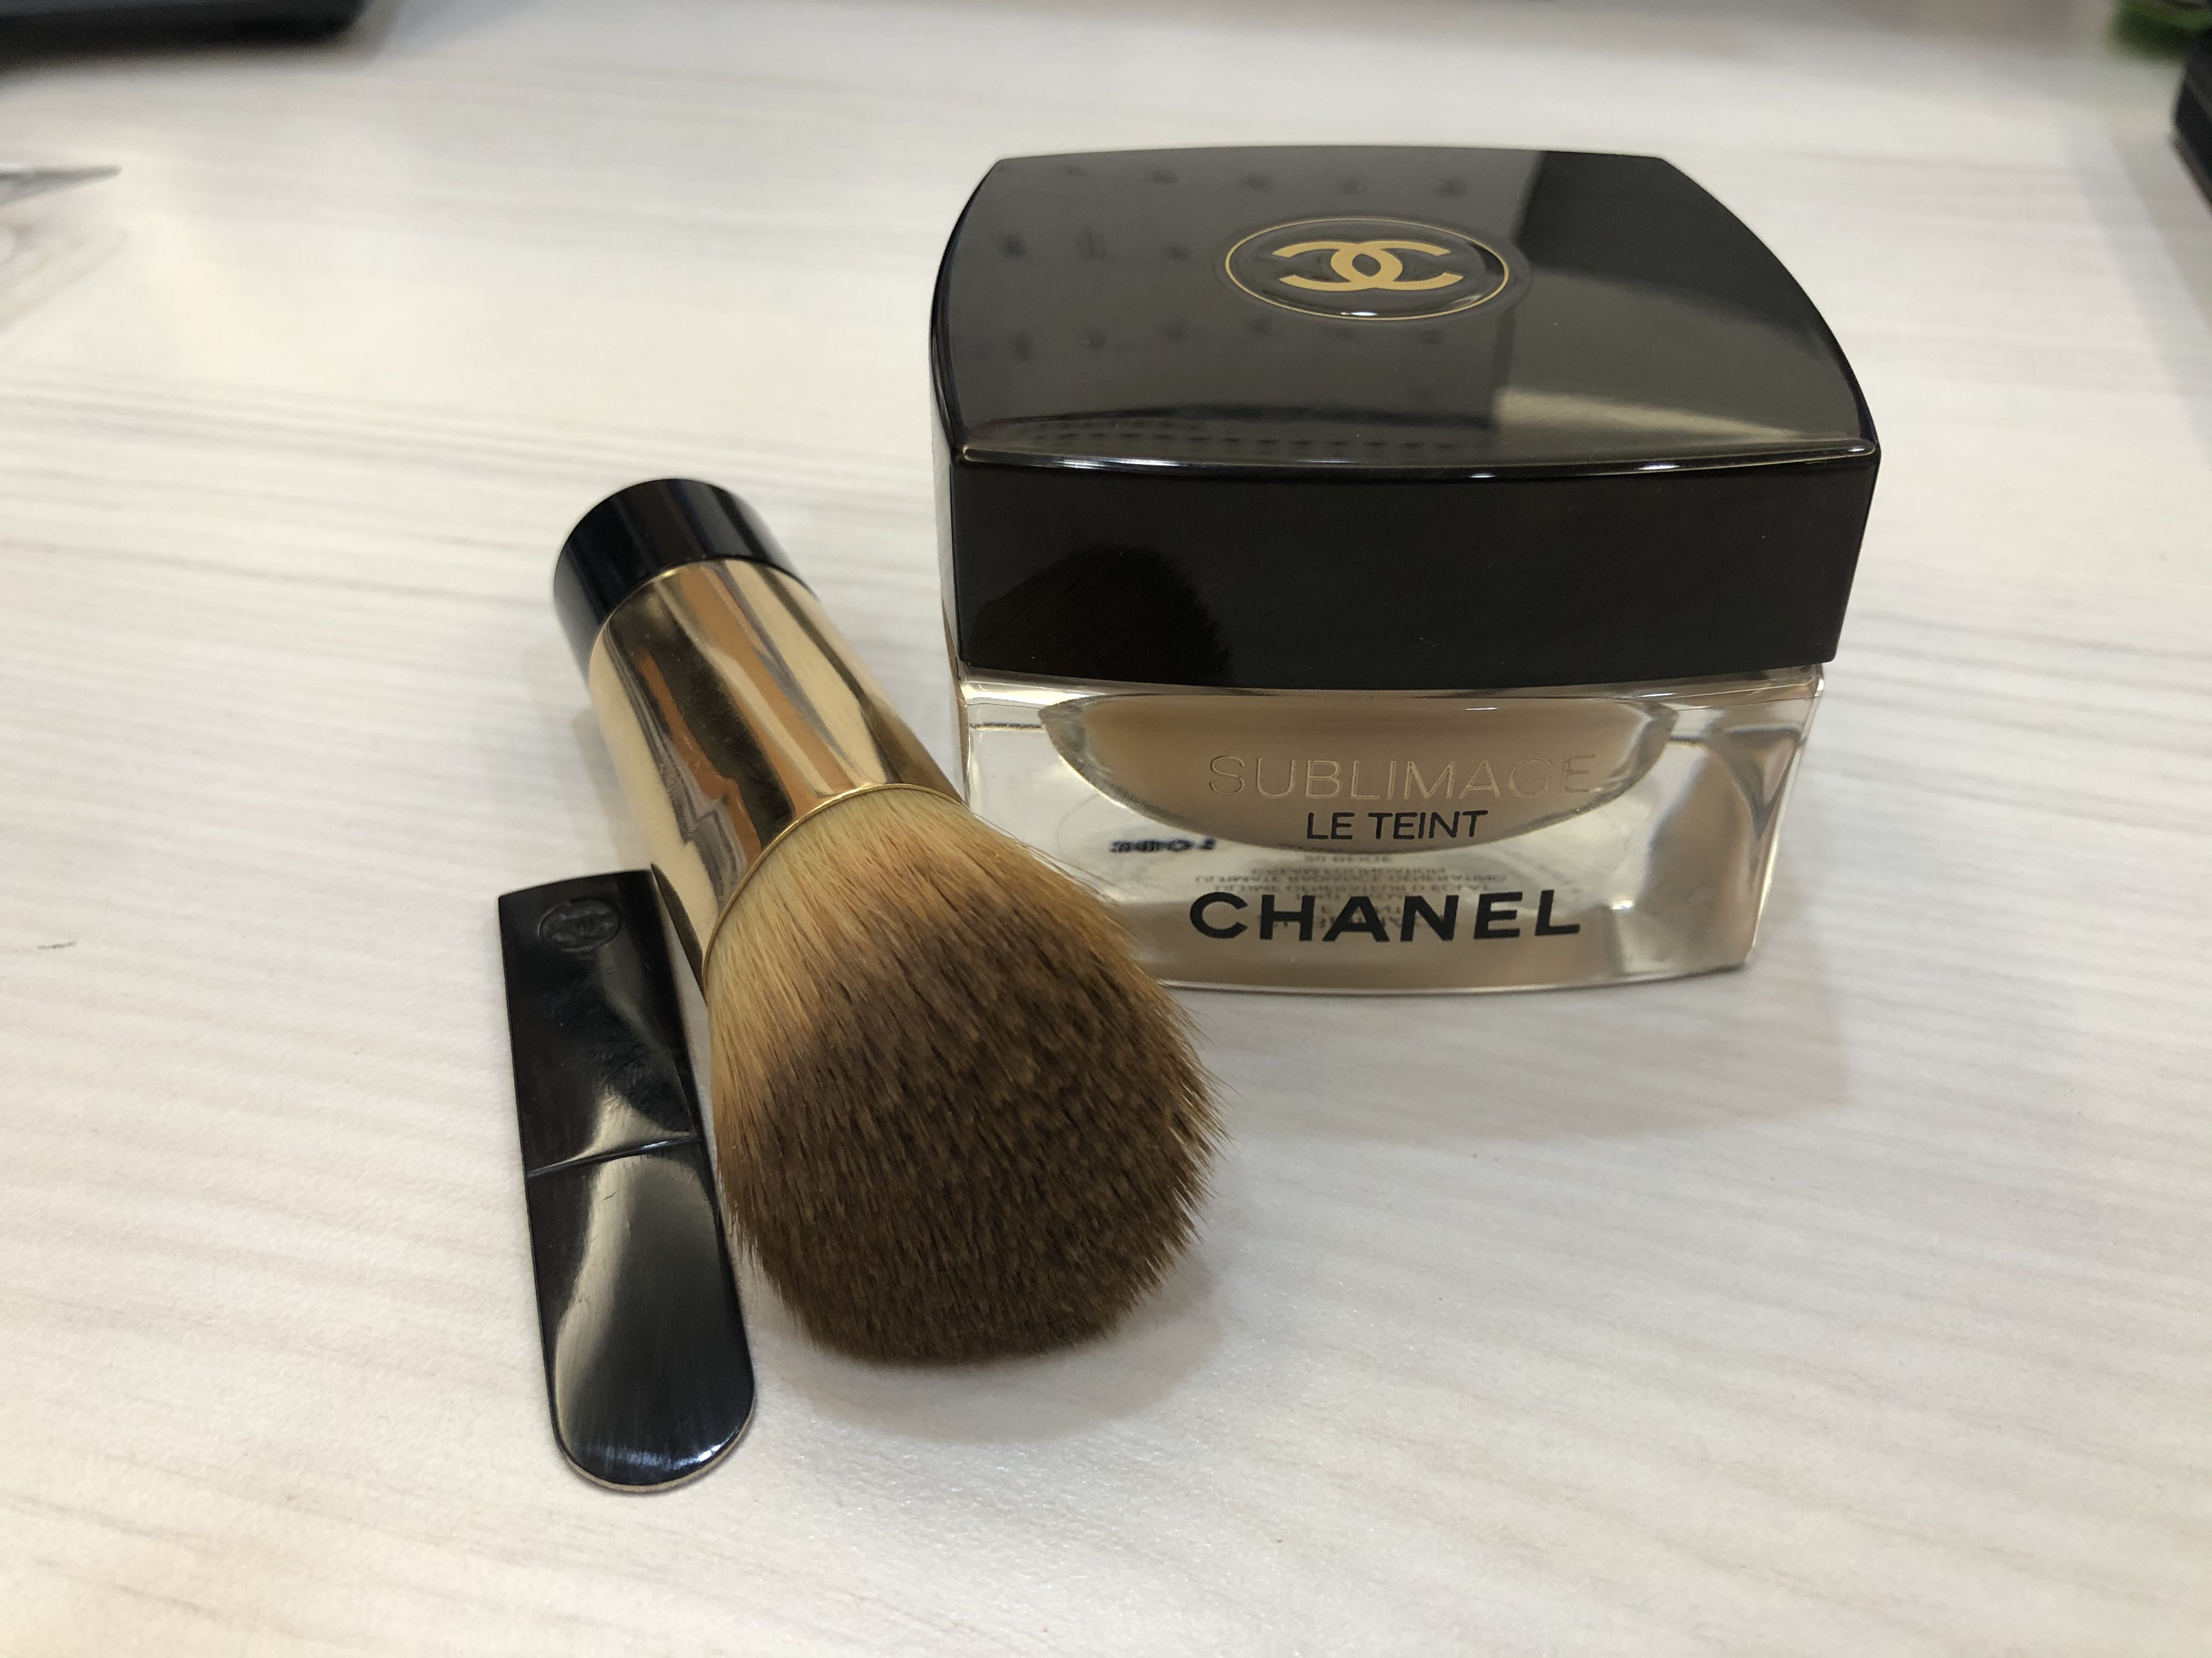 Chanel Sublimage Le Teint, Beauty & Personal Care, Face, Makeup on